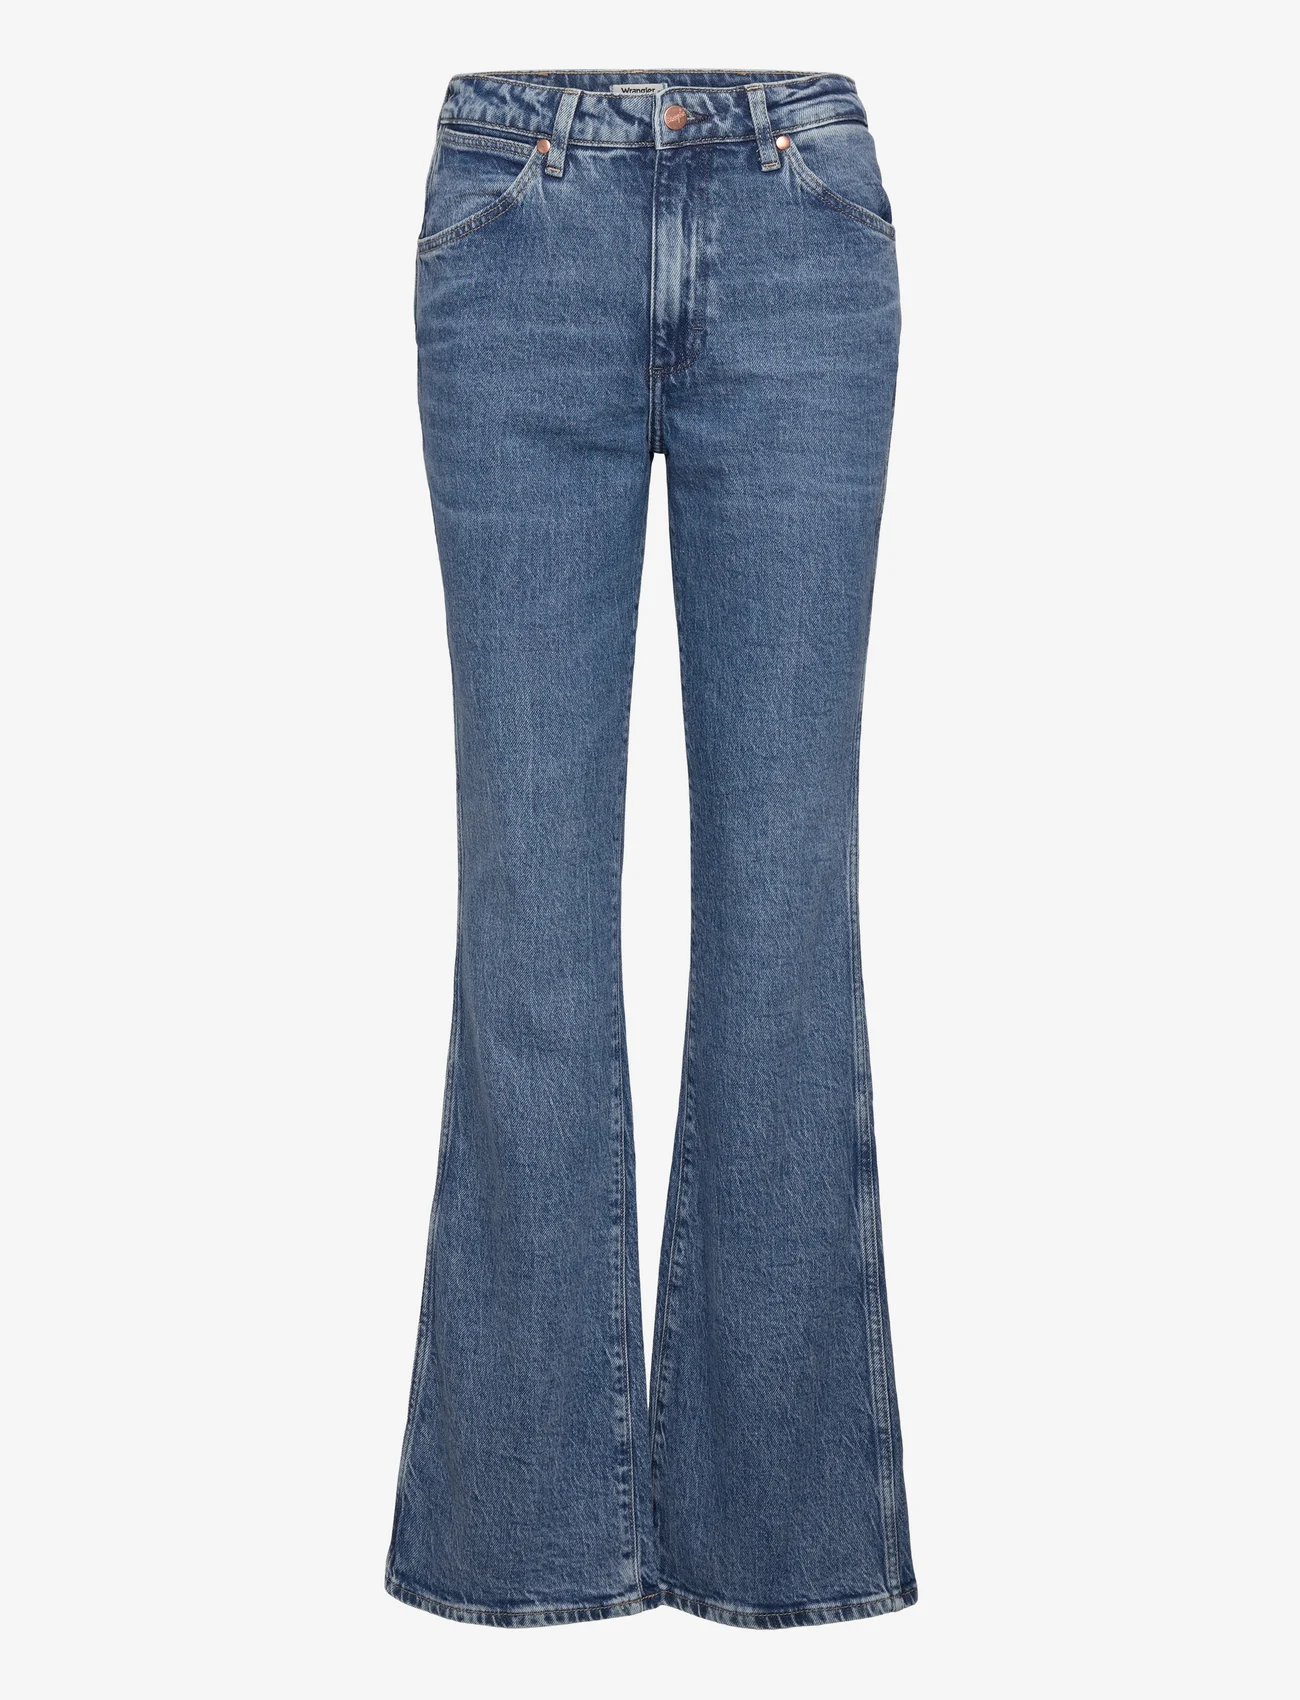 Wrangler - WESTWARD - bootcut jeans - kylie - 0